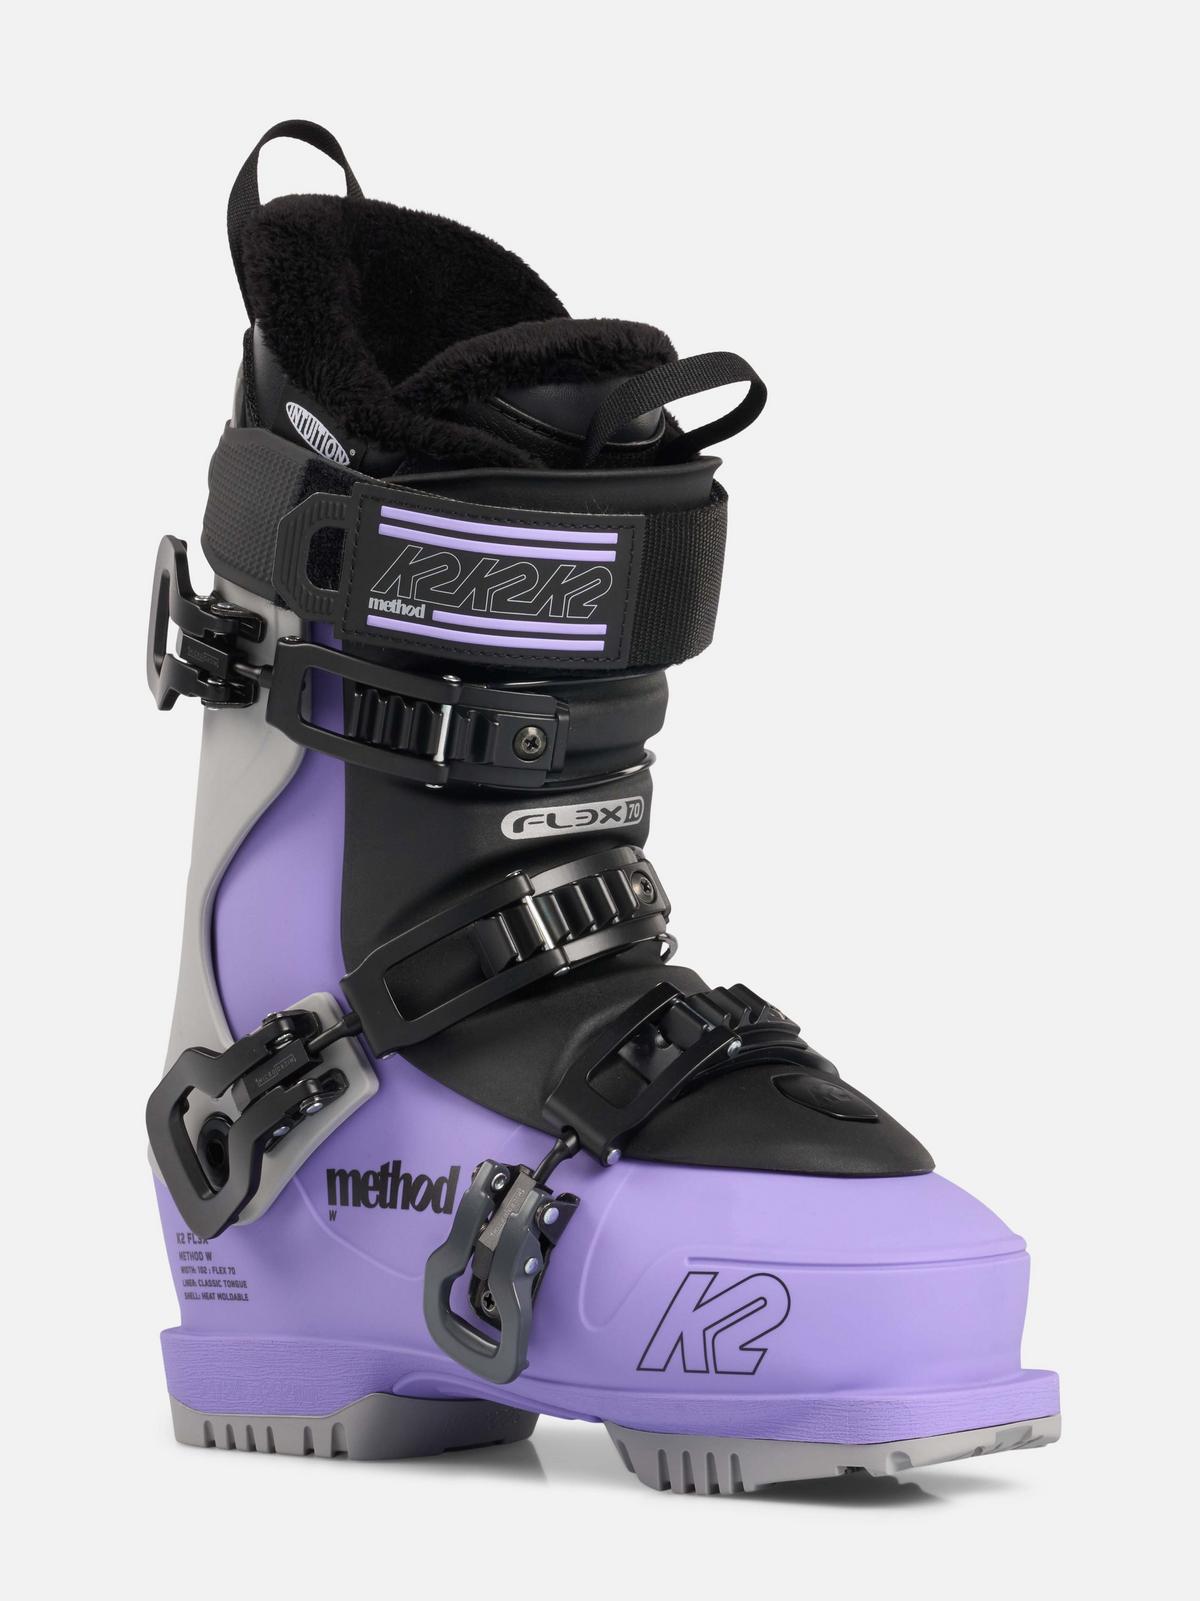 ski boots for women